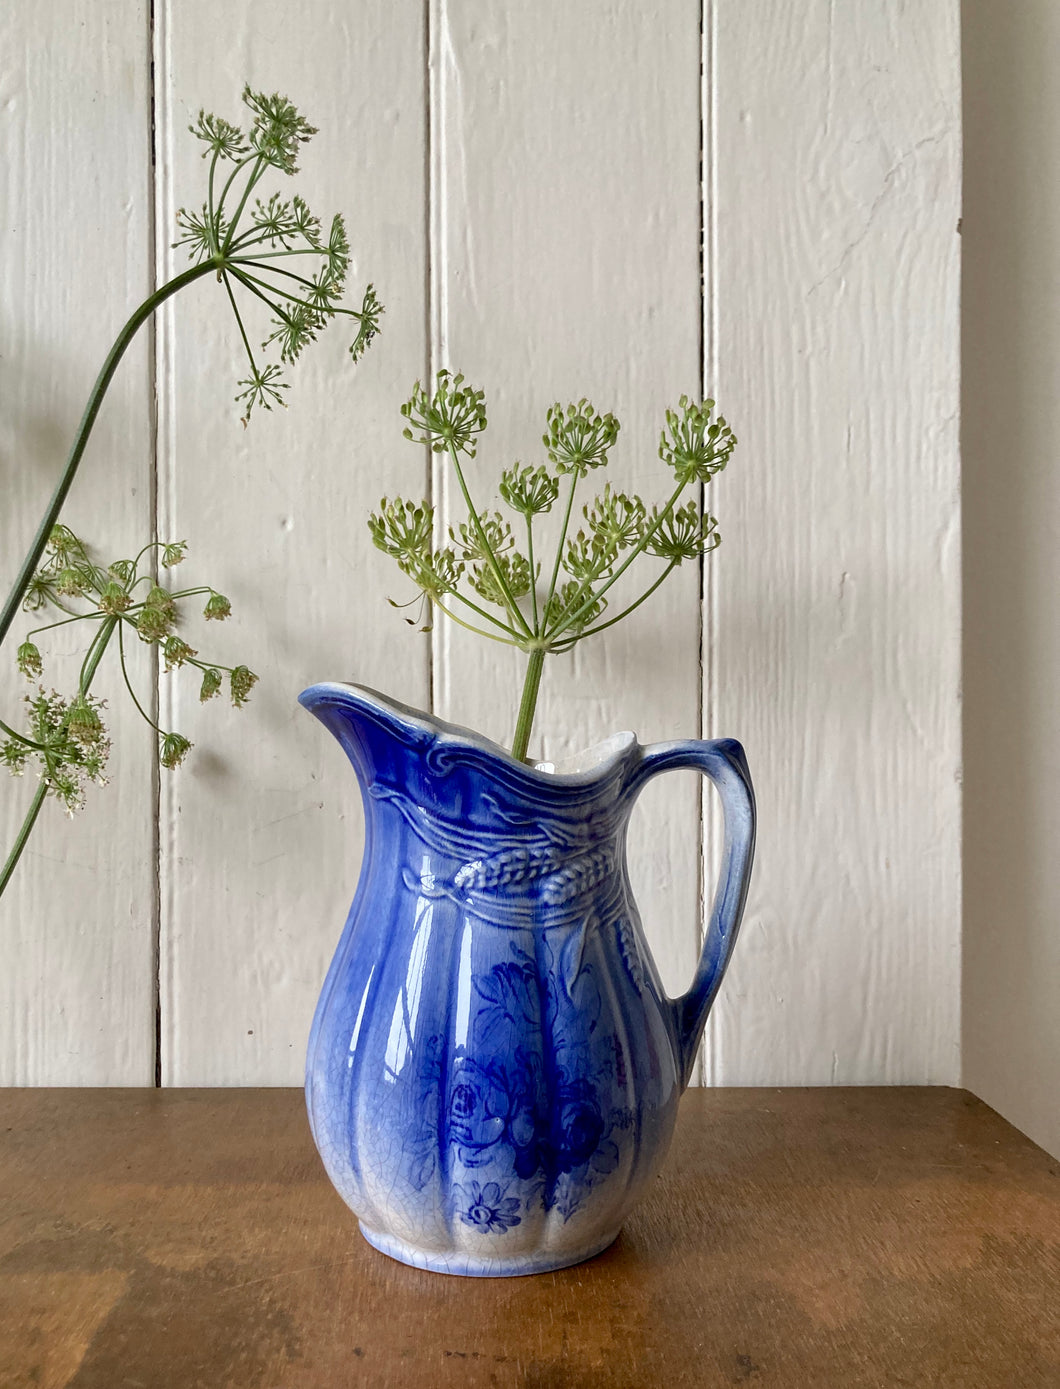 Blue glazed Arthur Wood antique jug with wheat sheaf and roses